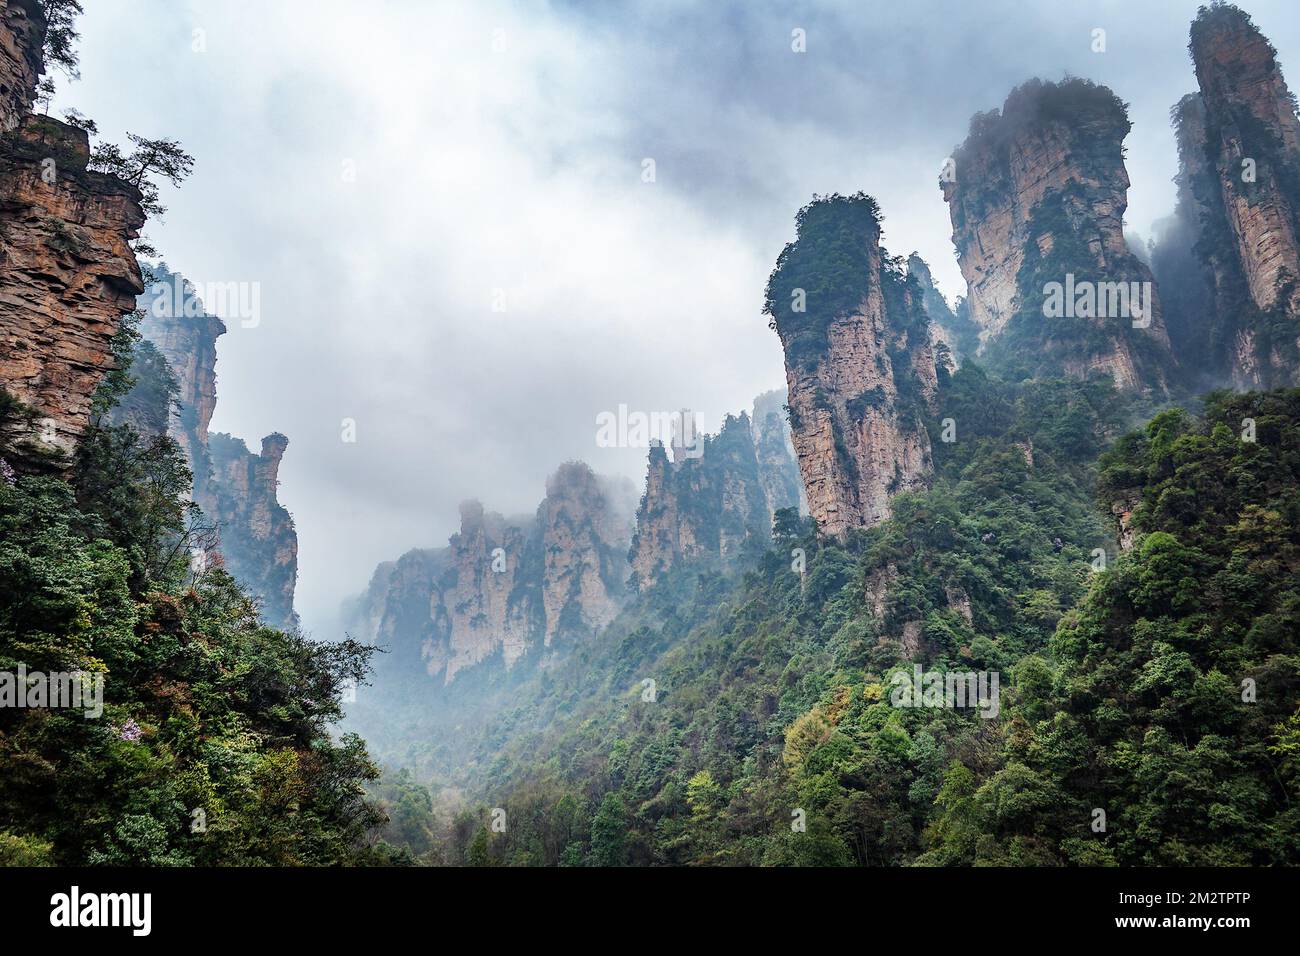 Misty steep mountain peaks in Zhangjiajie, China. Avatar floating mountains landscape Stock Photo